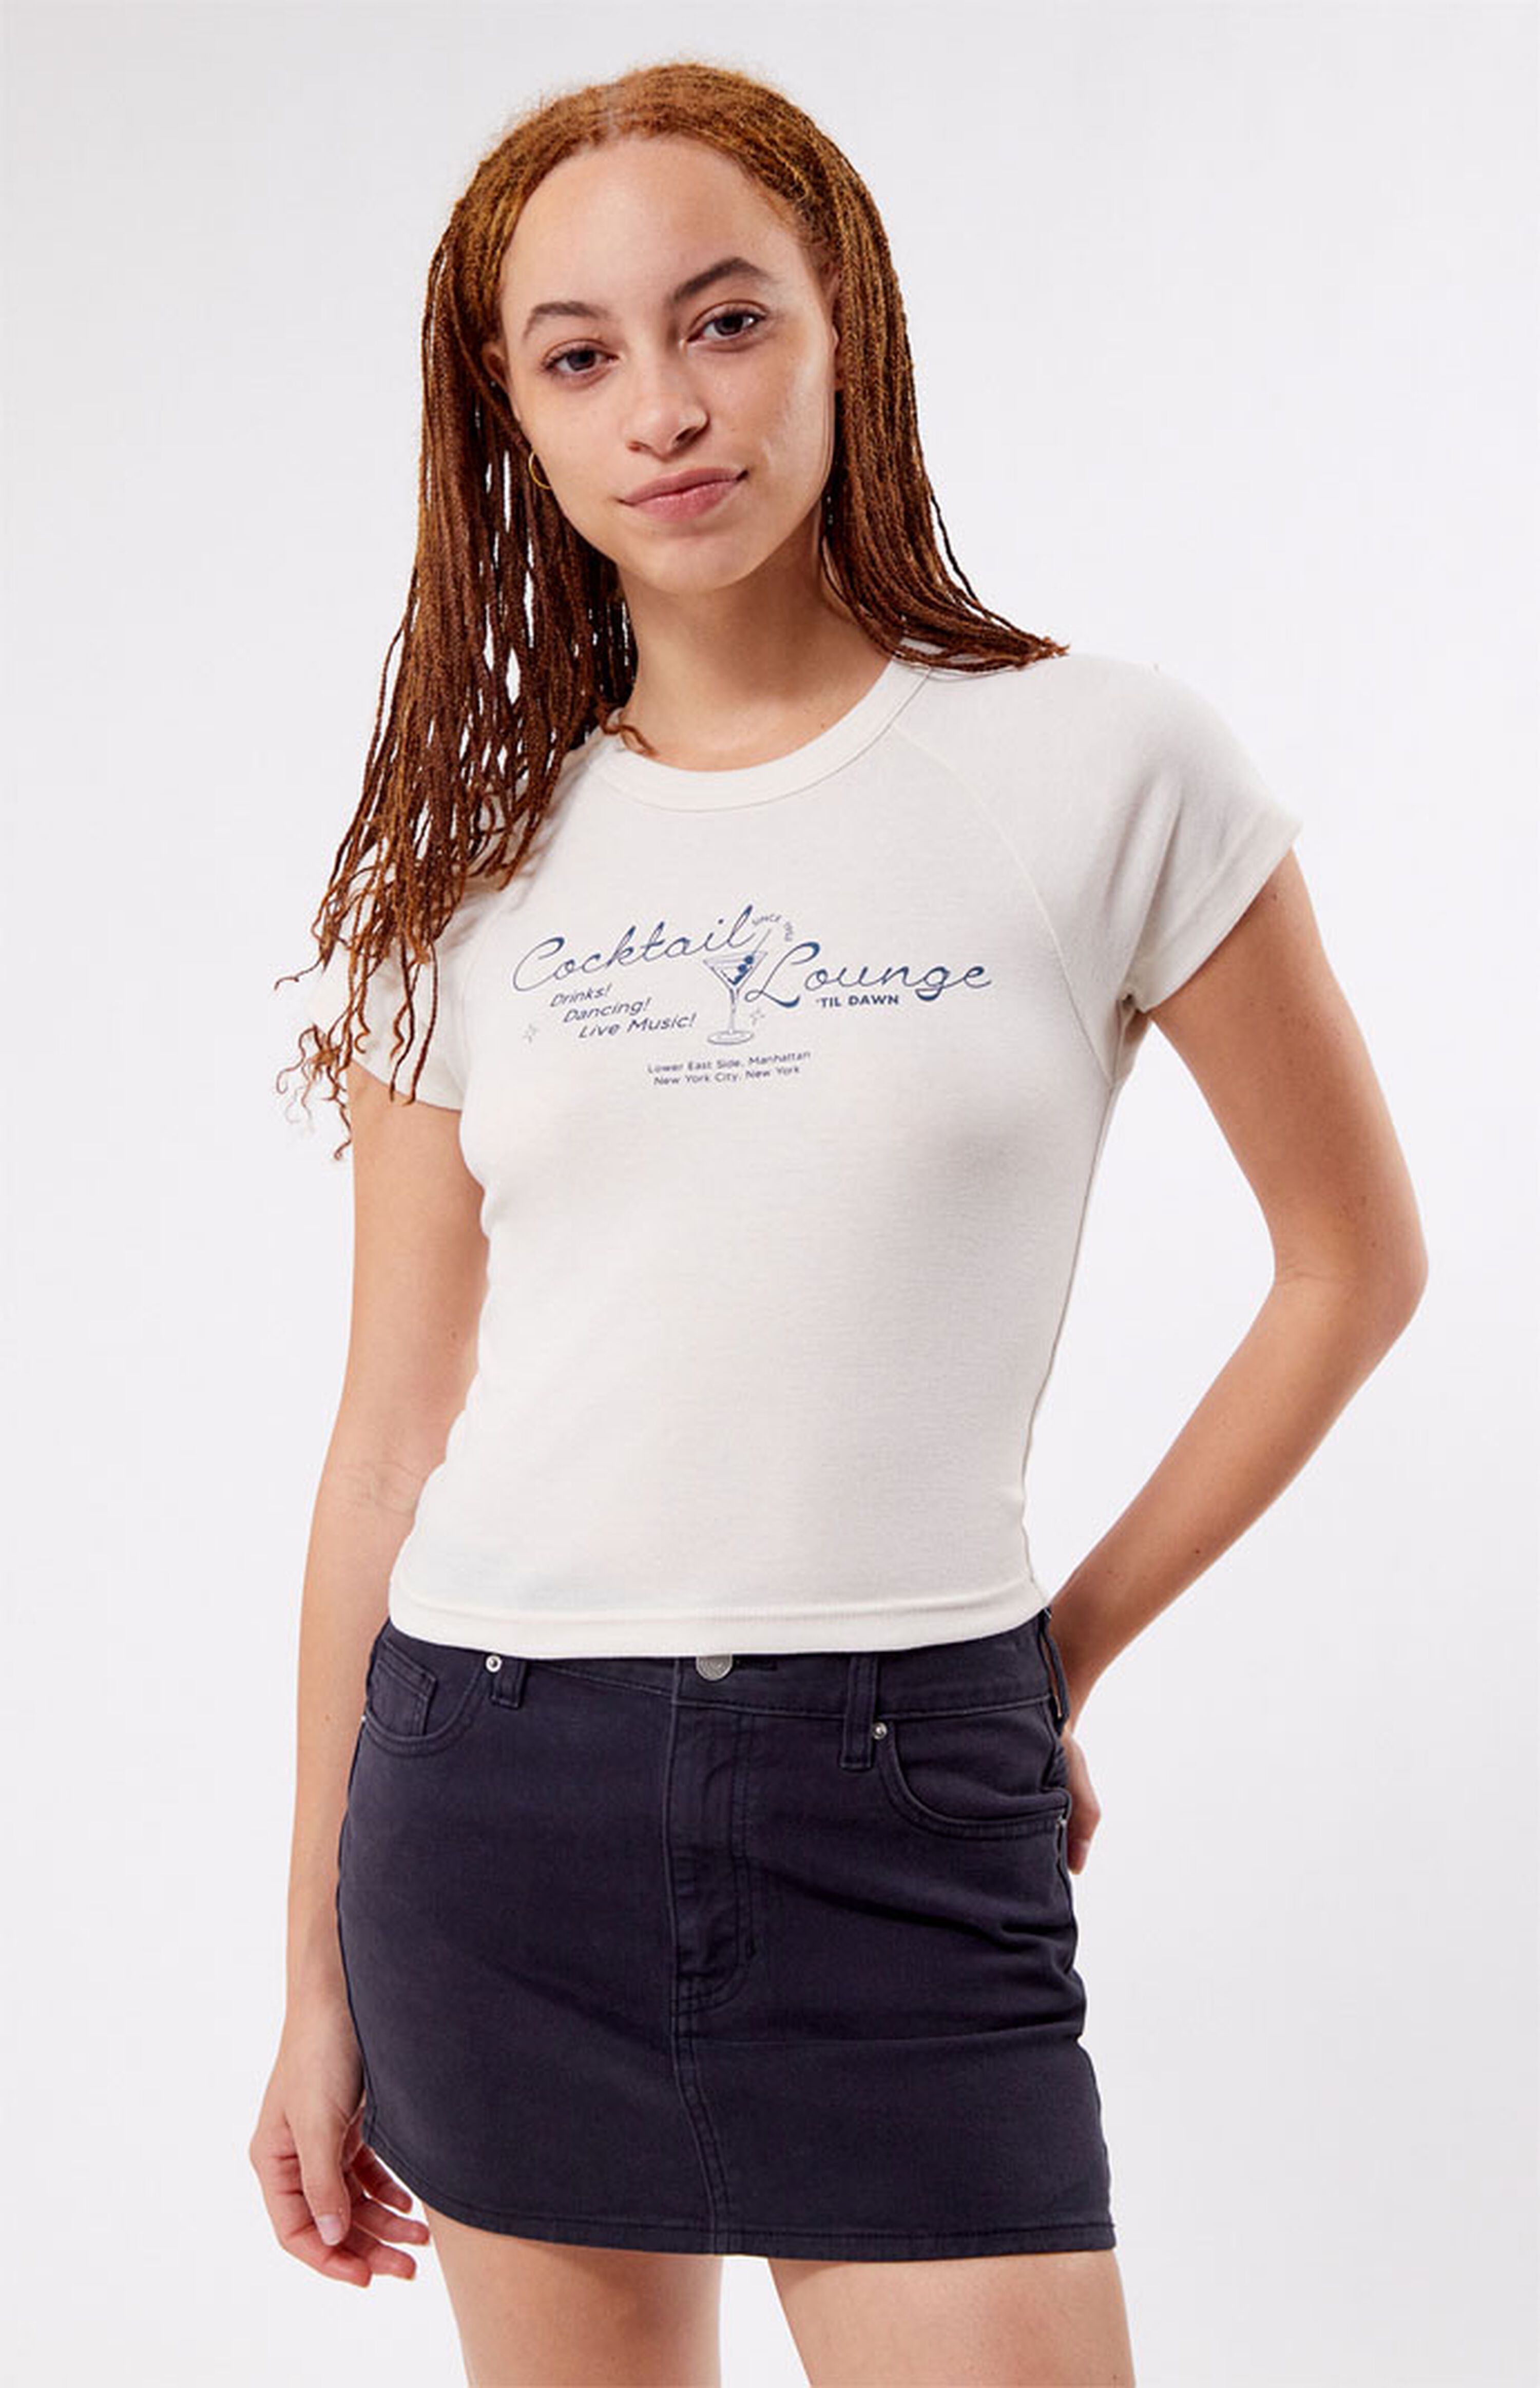 PacSun Cocktail Lounge Raglan T-Shirt | PacSun